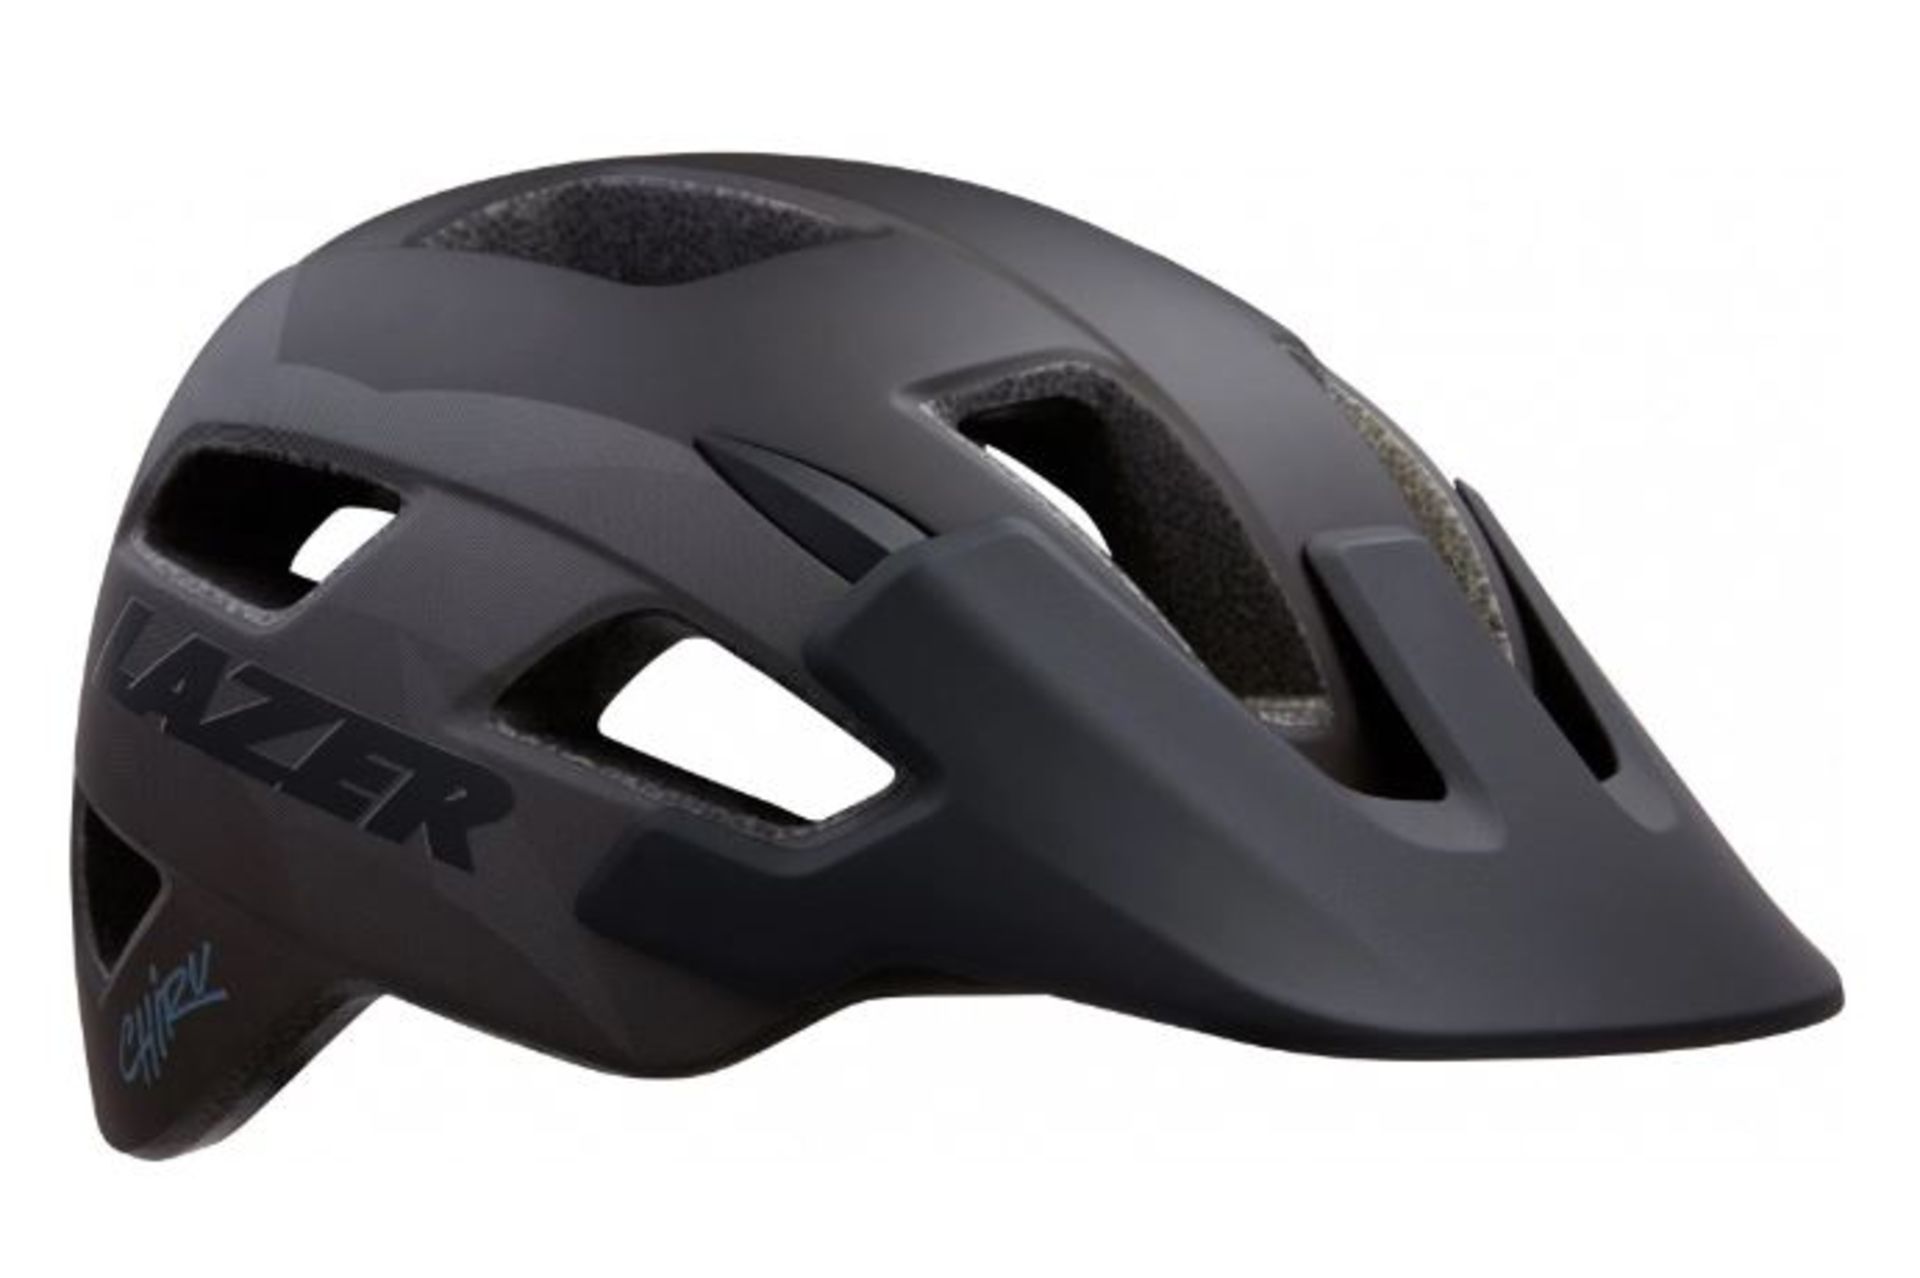 Lazer Chiru MTB Helmet, Size M (55-59cm) - Matte Black / Grey